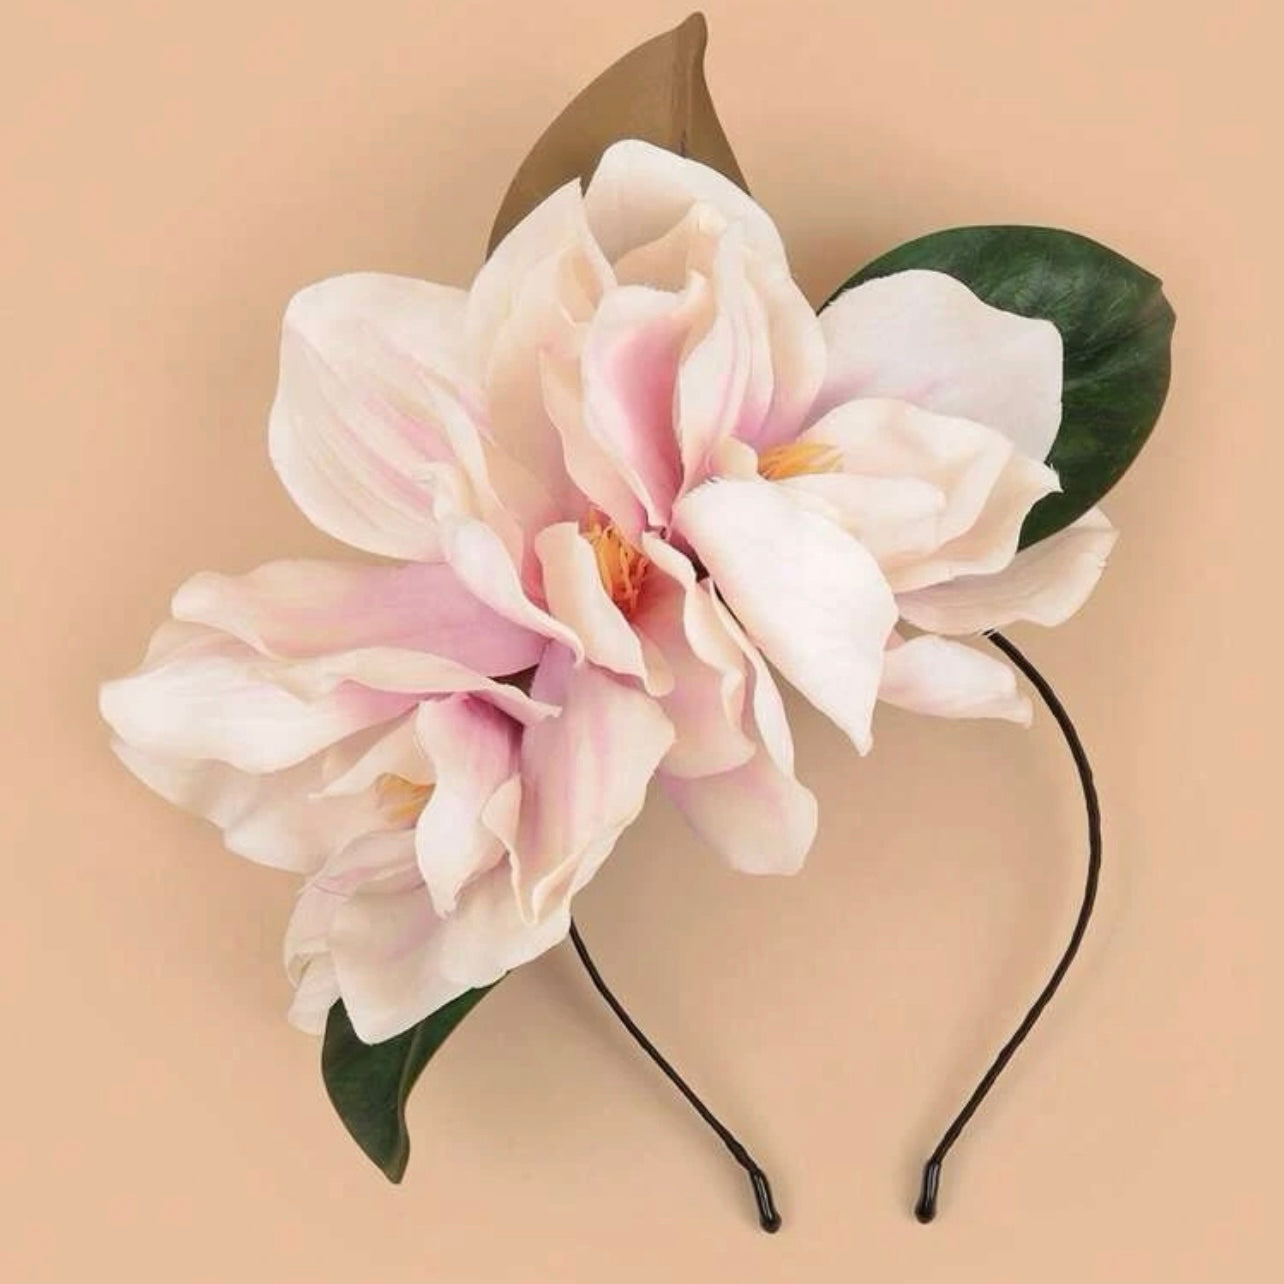 Magnolia Flower Headband - Handmade Headpiece, Flower Headpiece, Floral Headband, Southern Belle